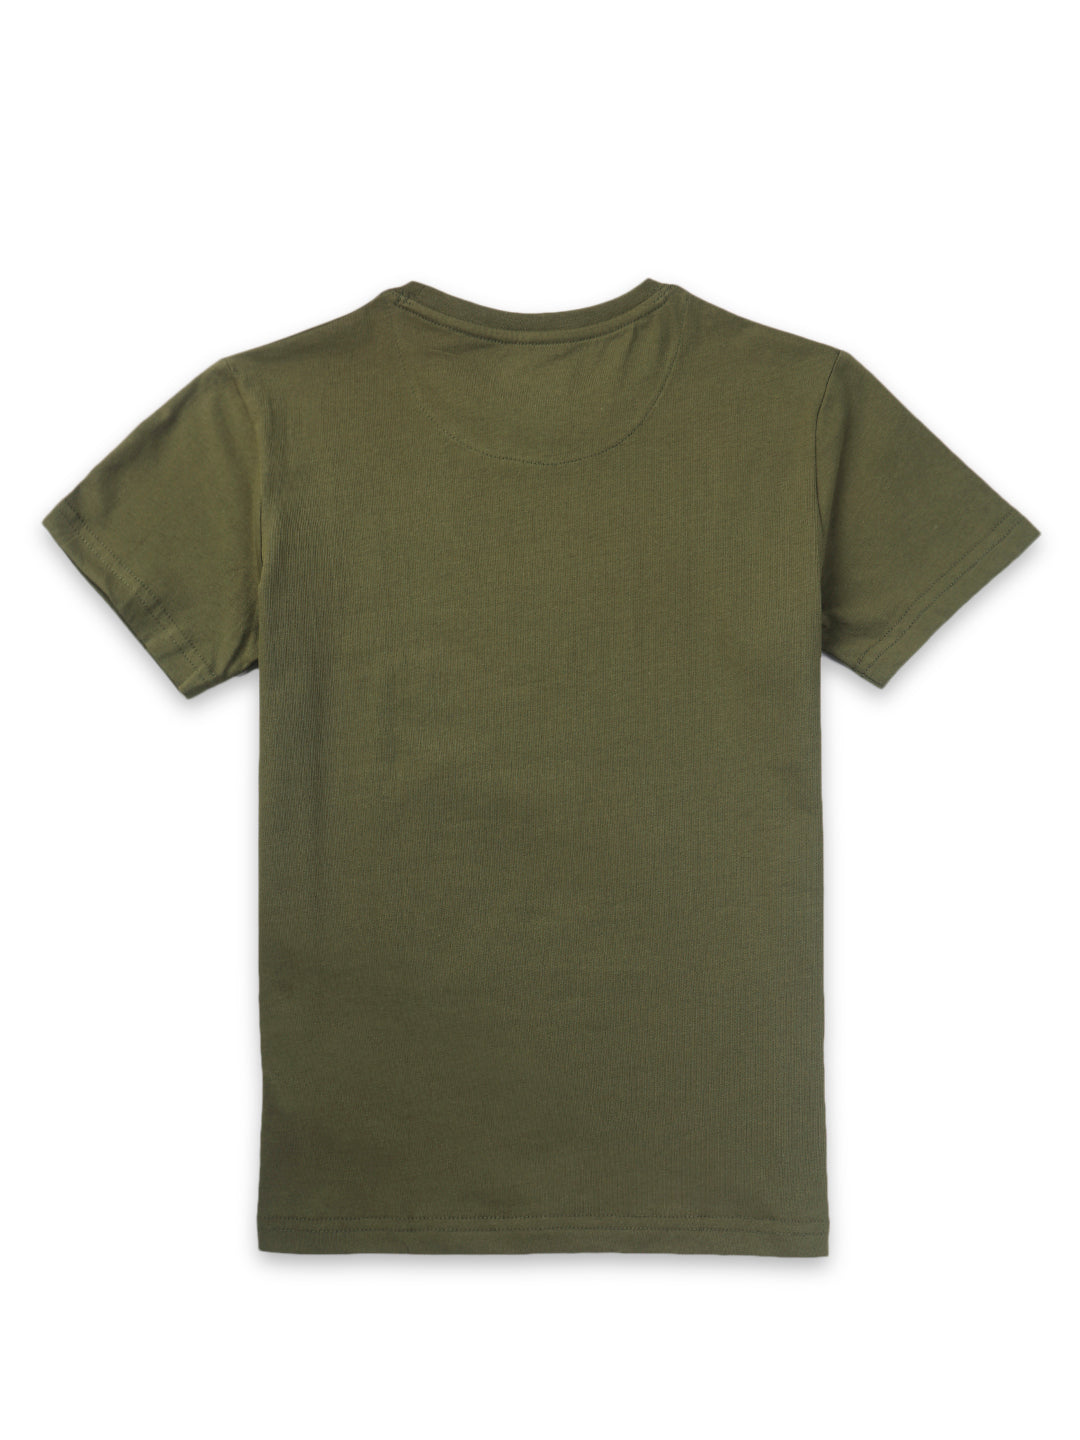 Boys Green Cotton Printed Half Sleeves T-Shirt